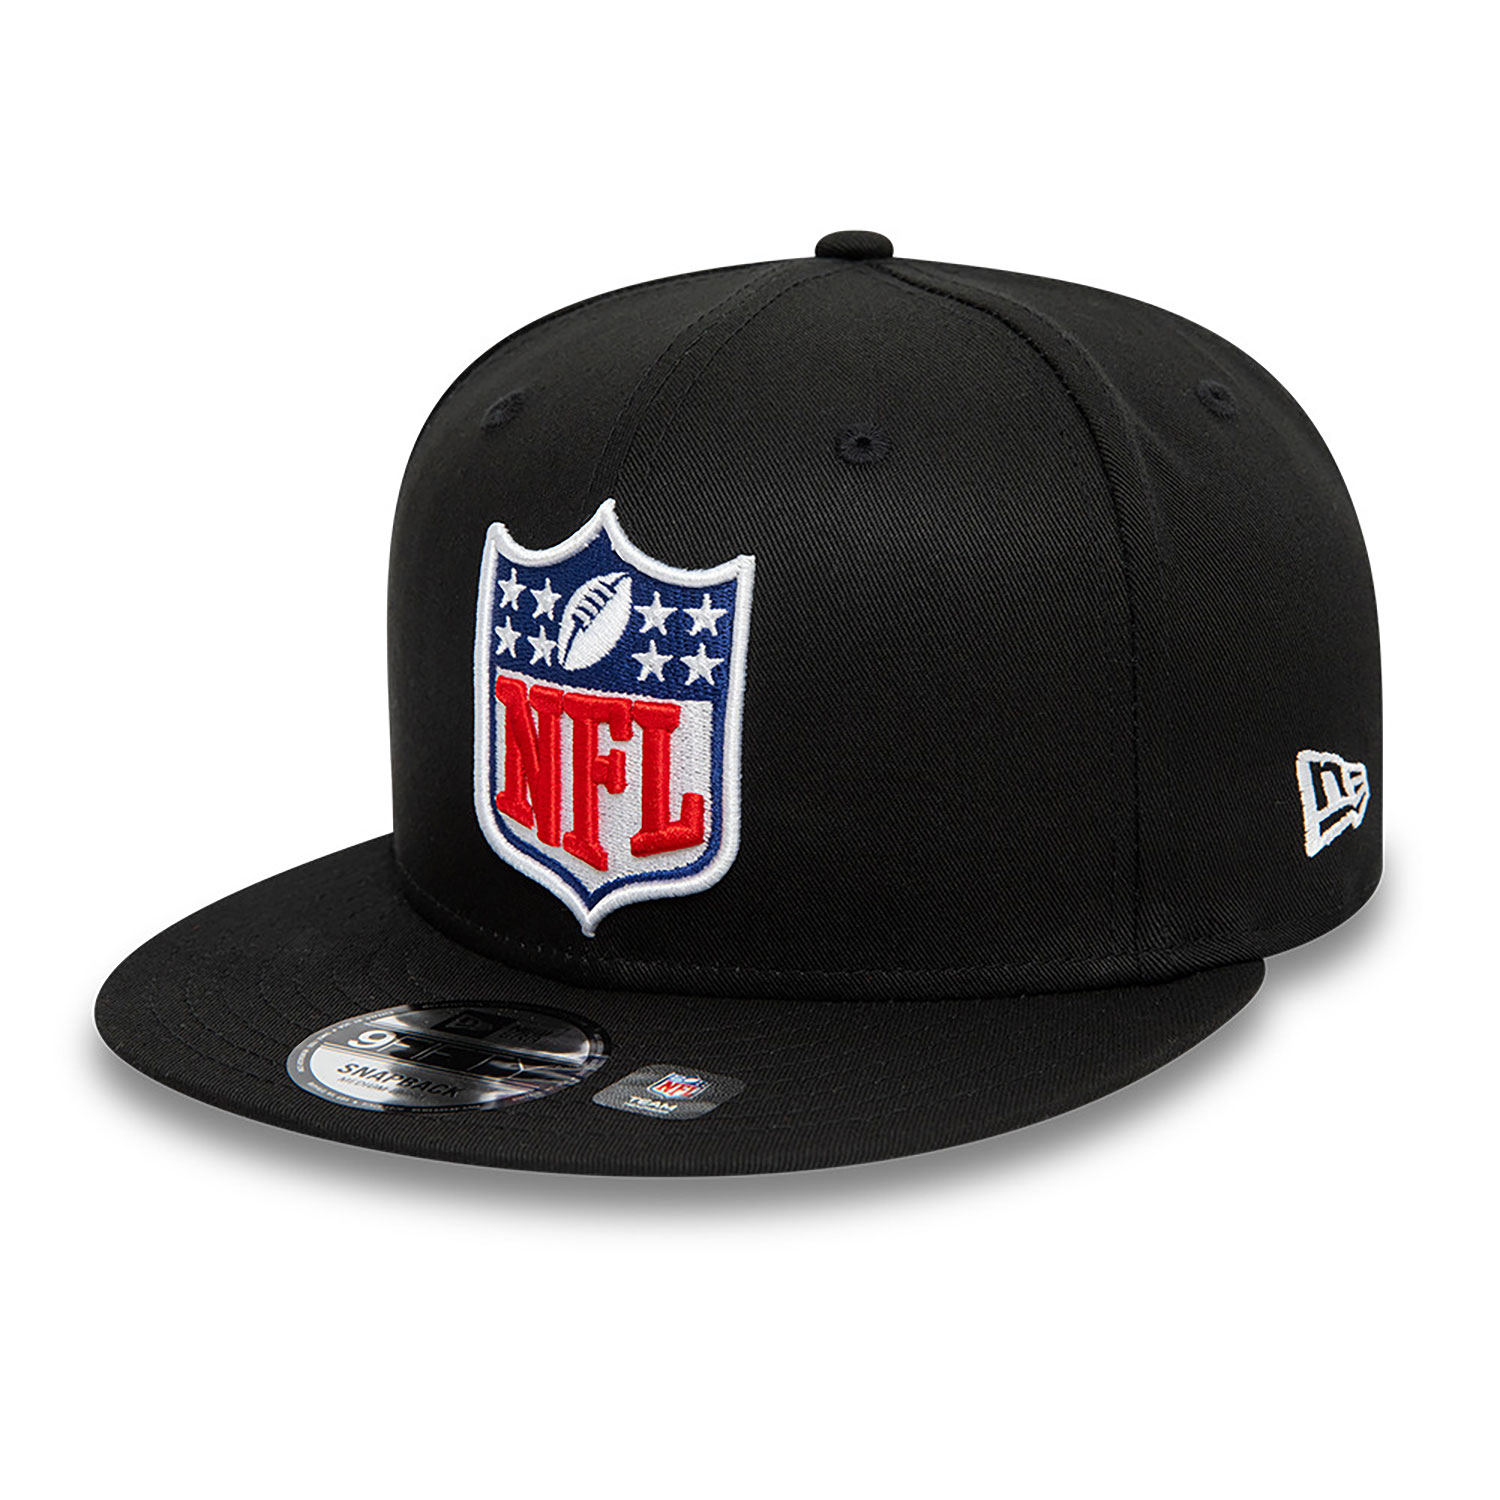 NFL London Games NFL Shield Black 9FIFTY Snapback Cap